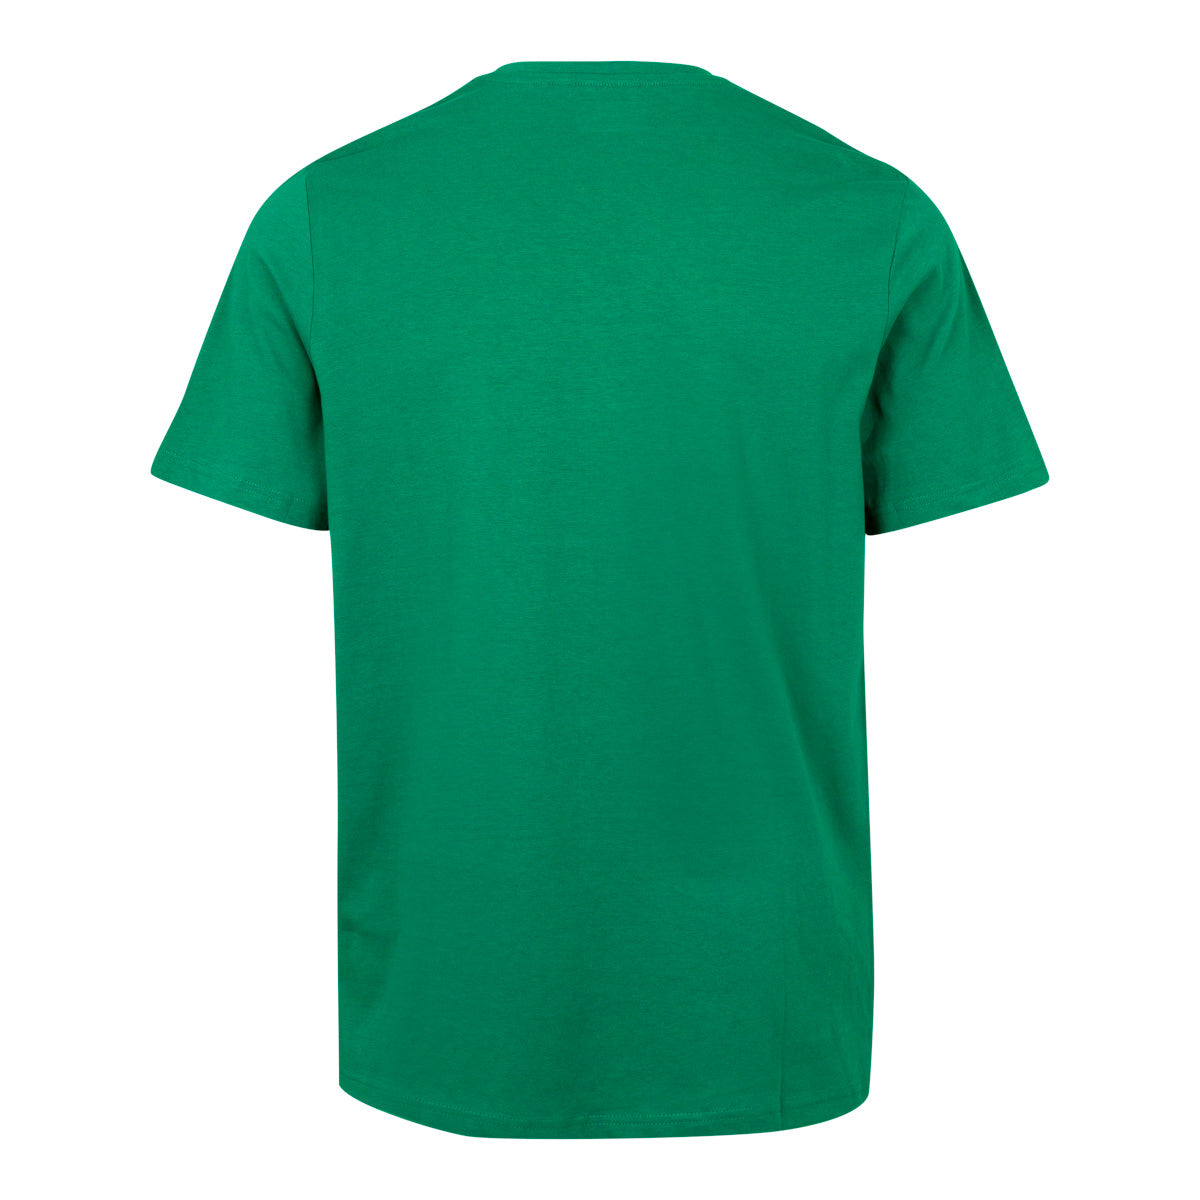 T-shirt Lifestyle Meleto Vert Enfant - Image 2